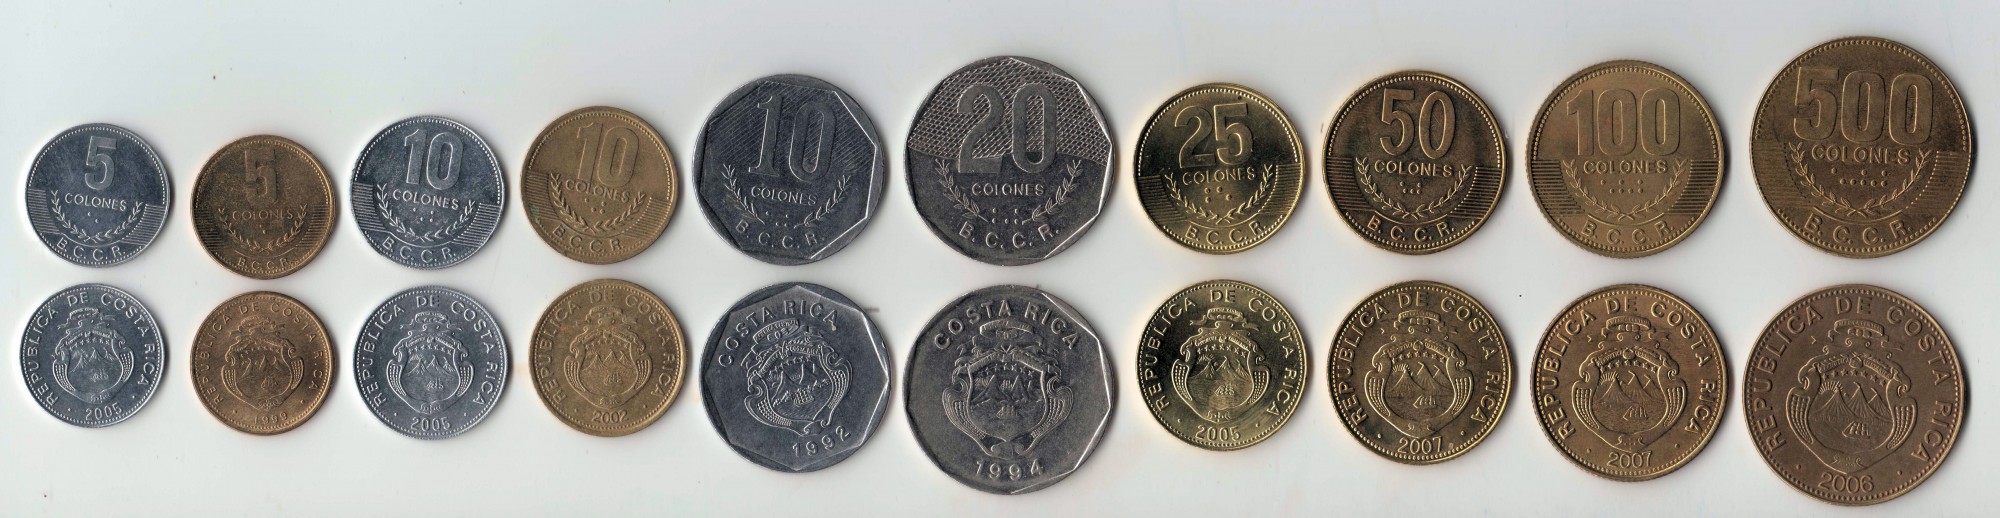 Costa Rica 2008 circulating coins